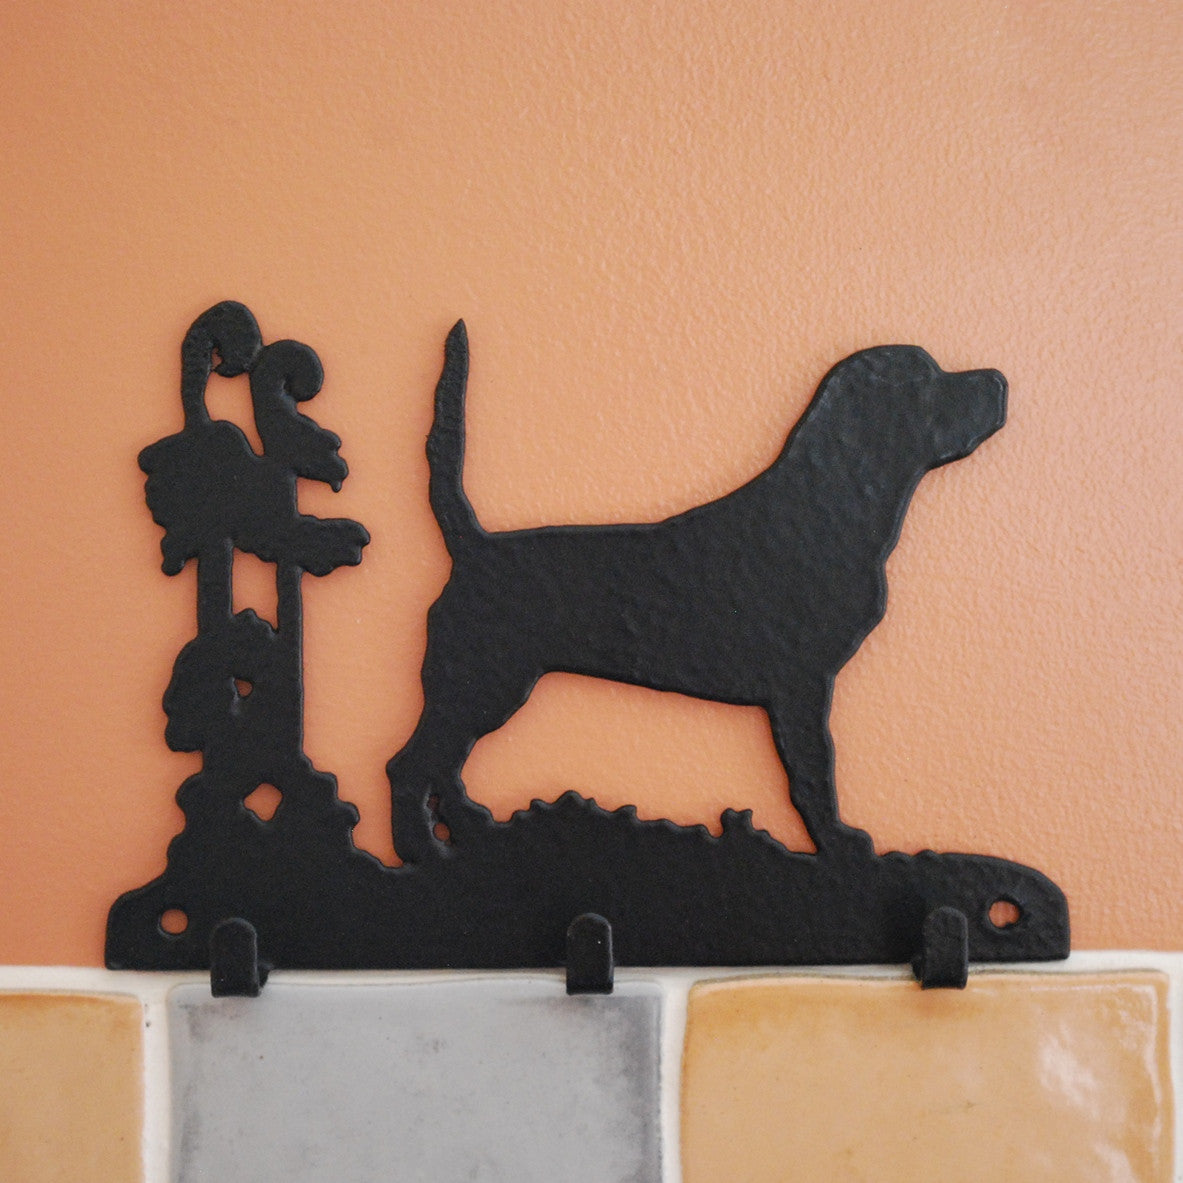 Lhaso Apso Dog Key Racks - 3 Hooks - Fernie's Choice Classic Country Wear for Dogs